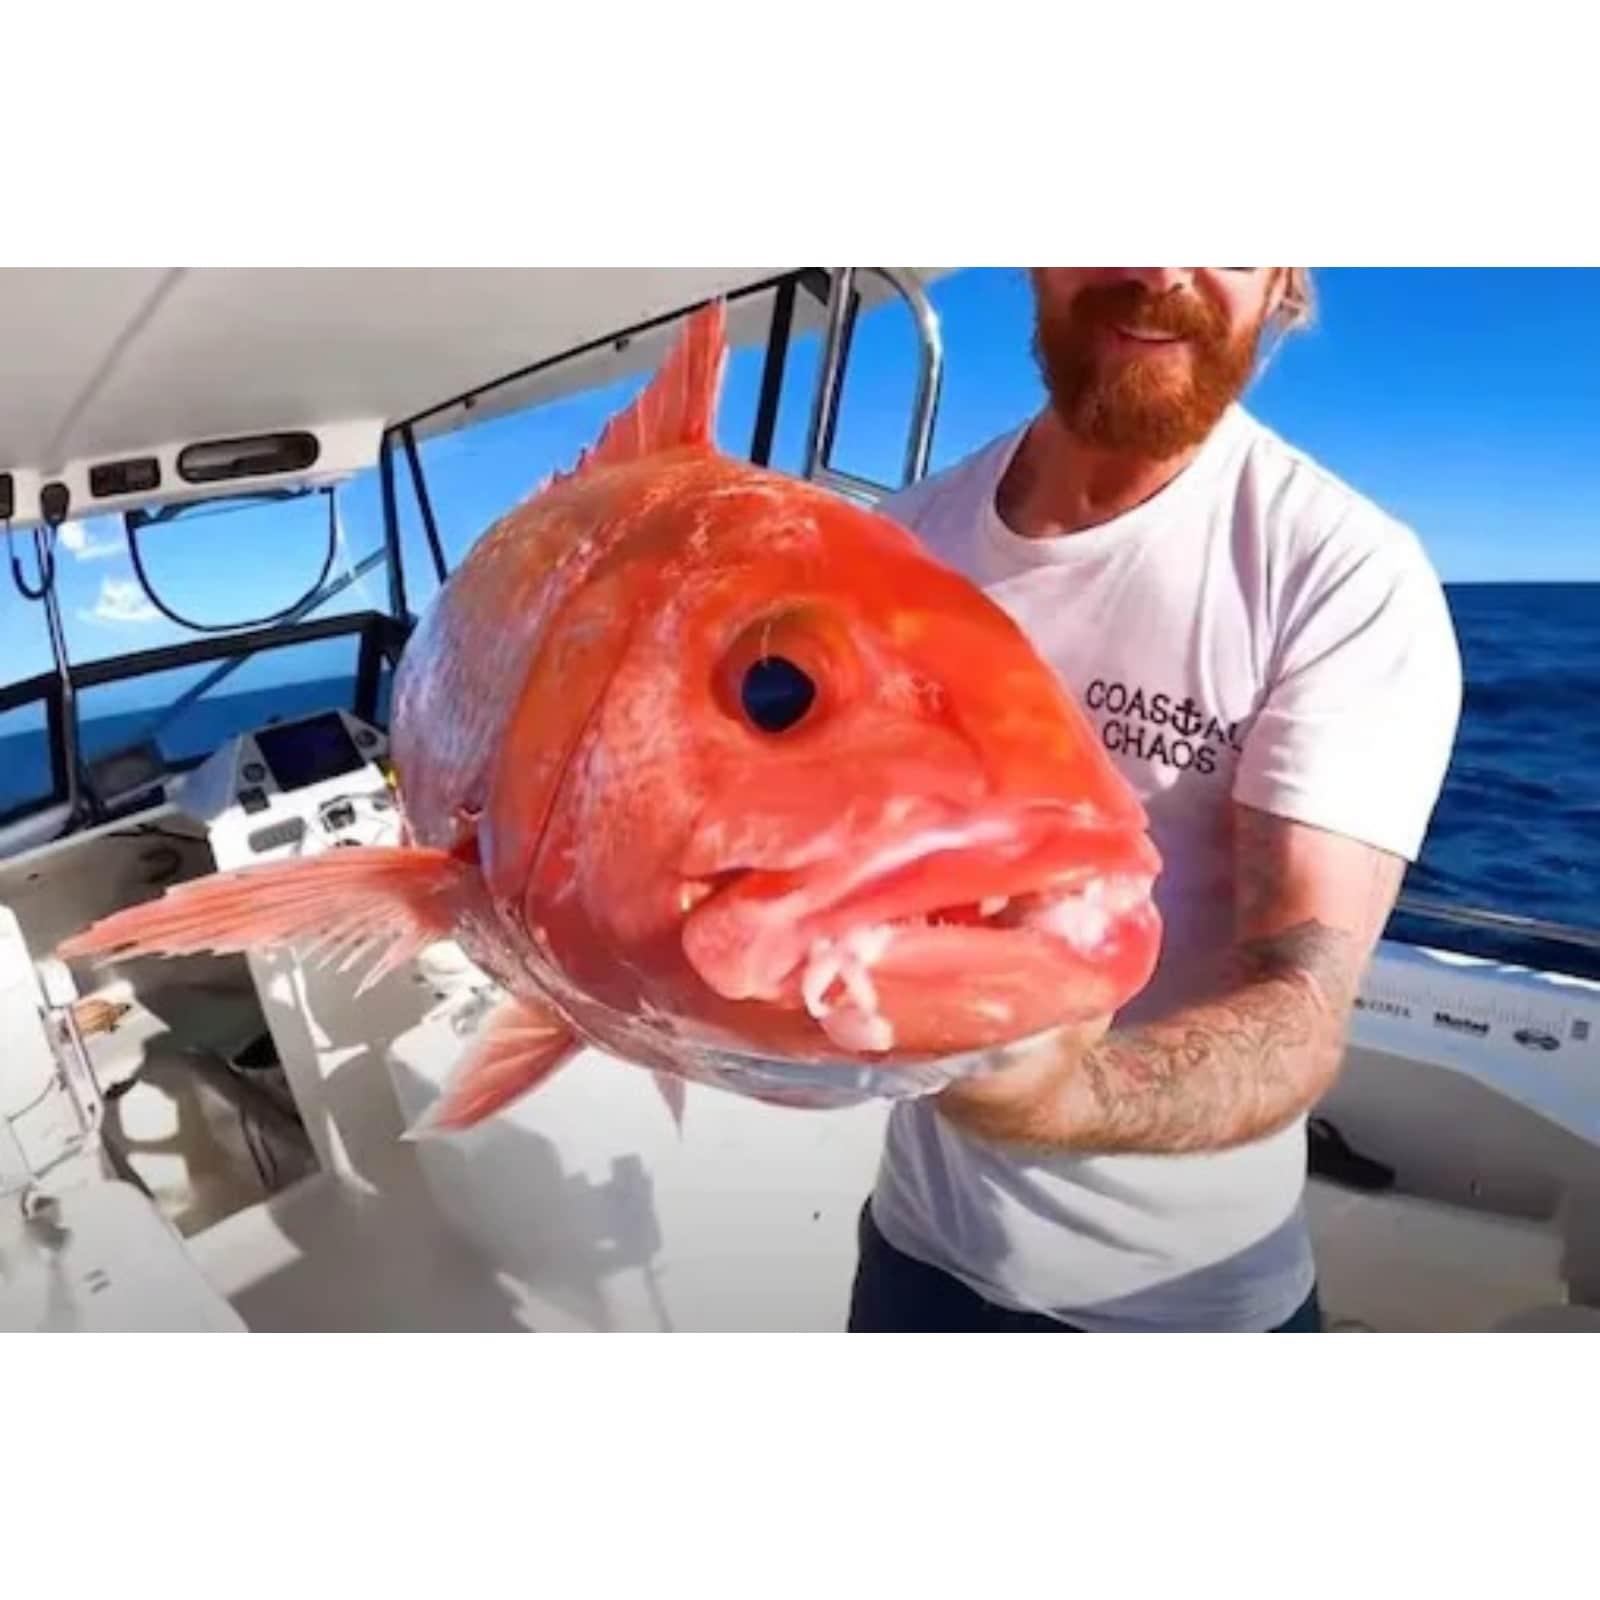 Australian Fisherman Catches Giant Fish, Expert Says Its 'Japanese Rubyfish'